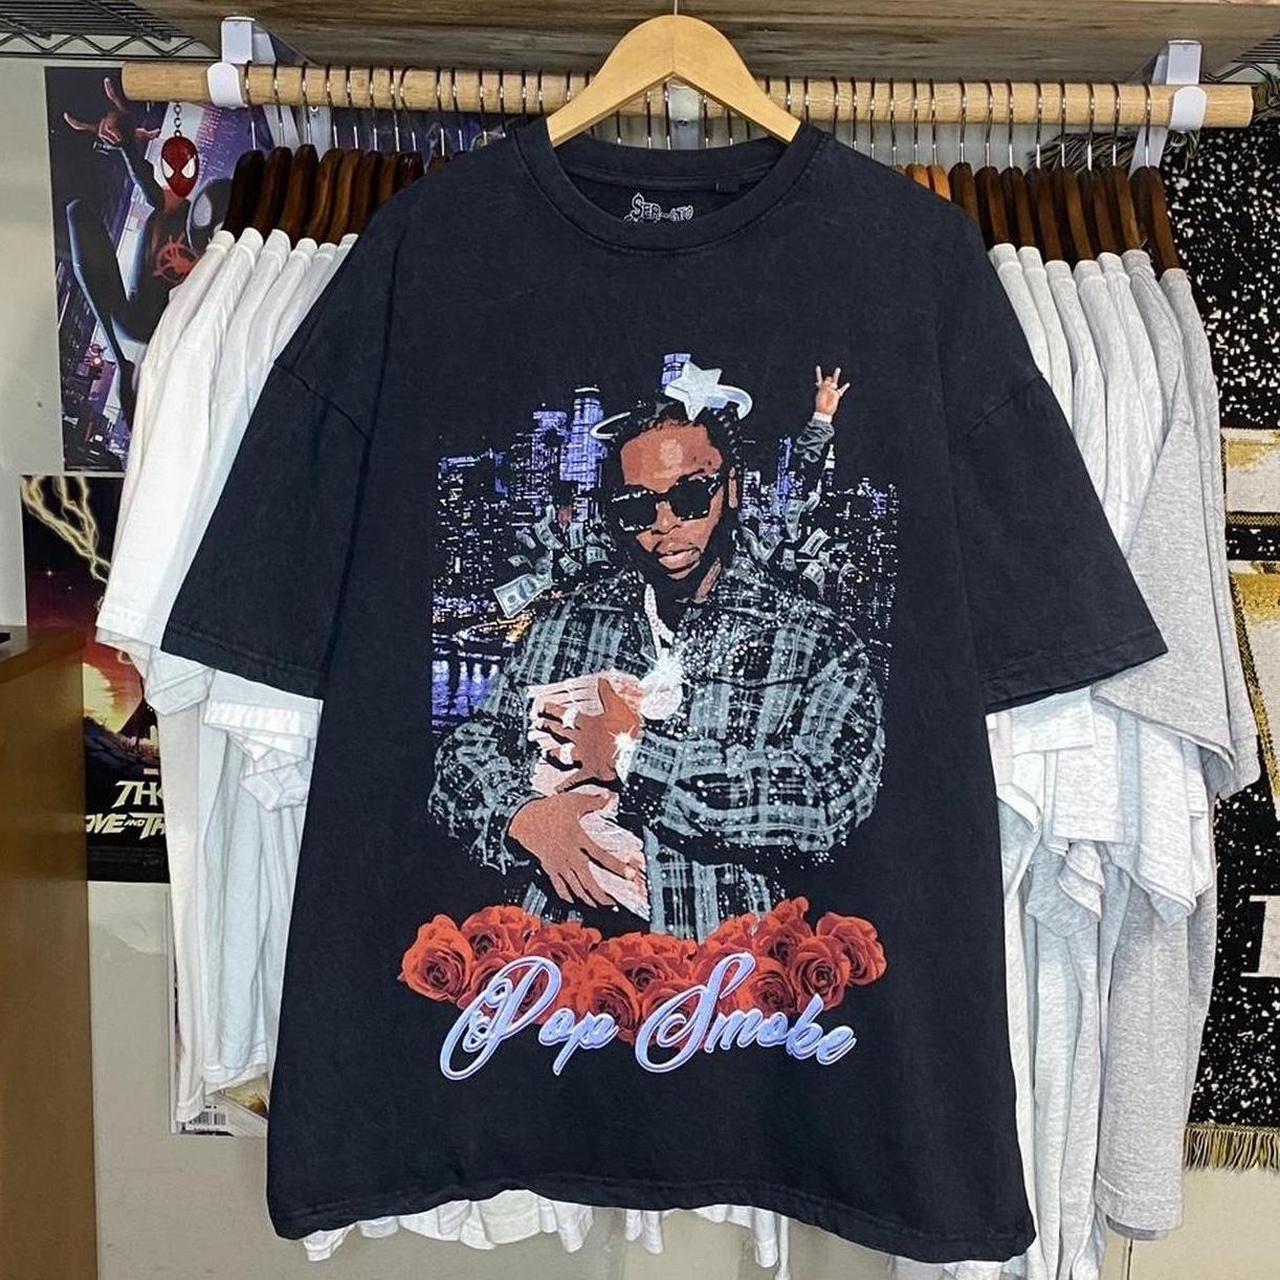 Vintage Style Pop Smoke Rapper Unisex Shirt Graphic Tee Hip 